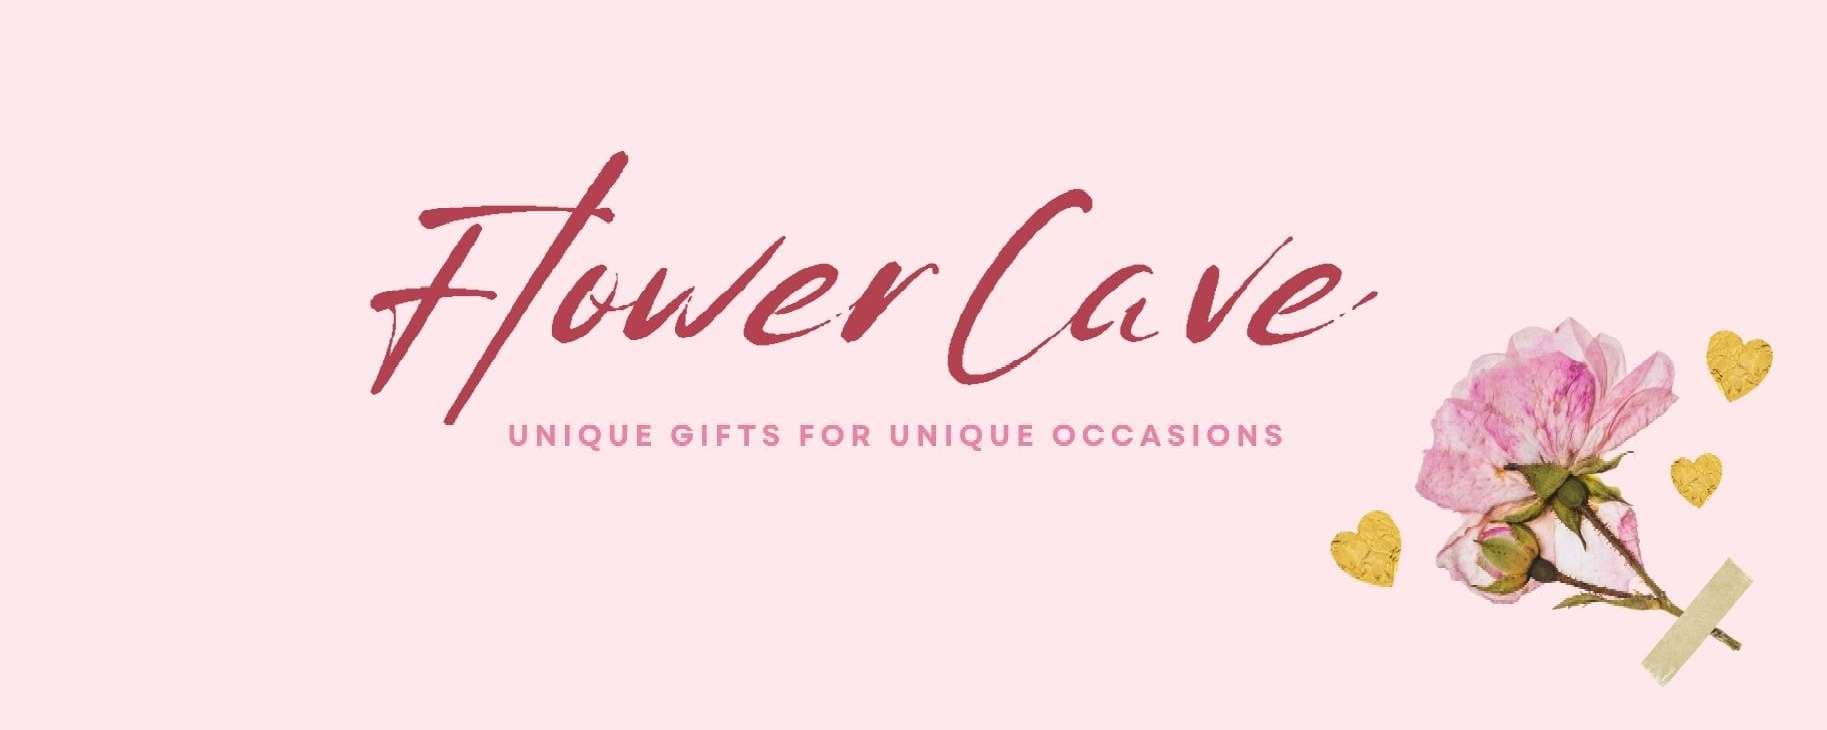 Flower Cave